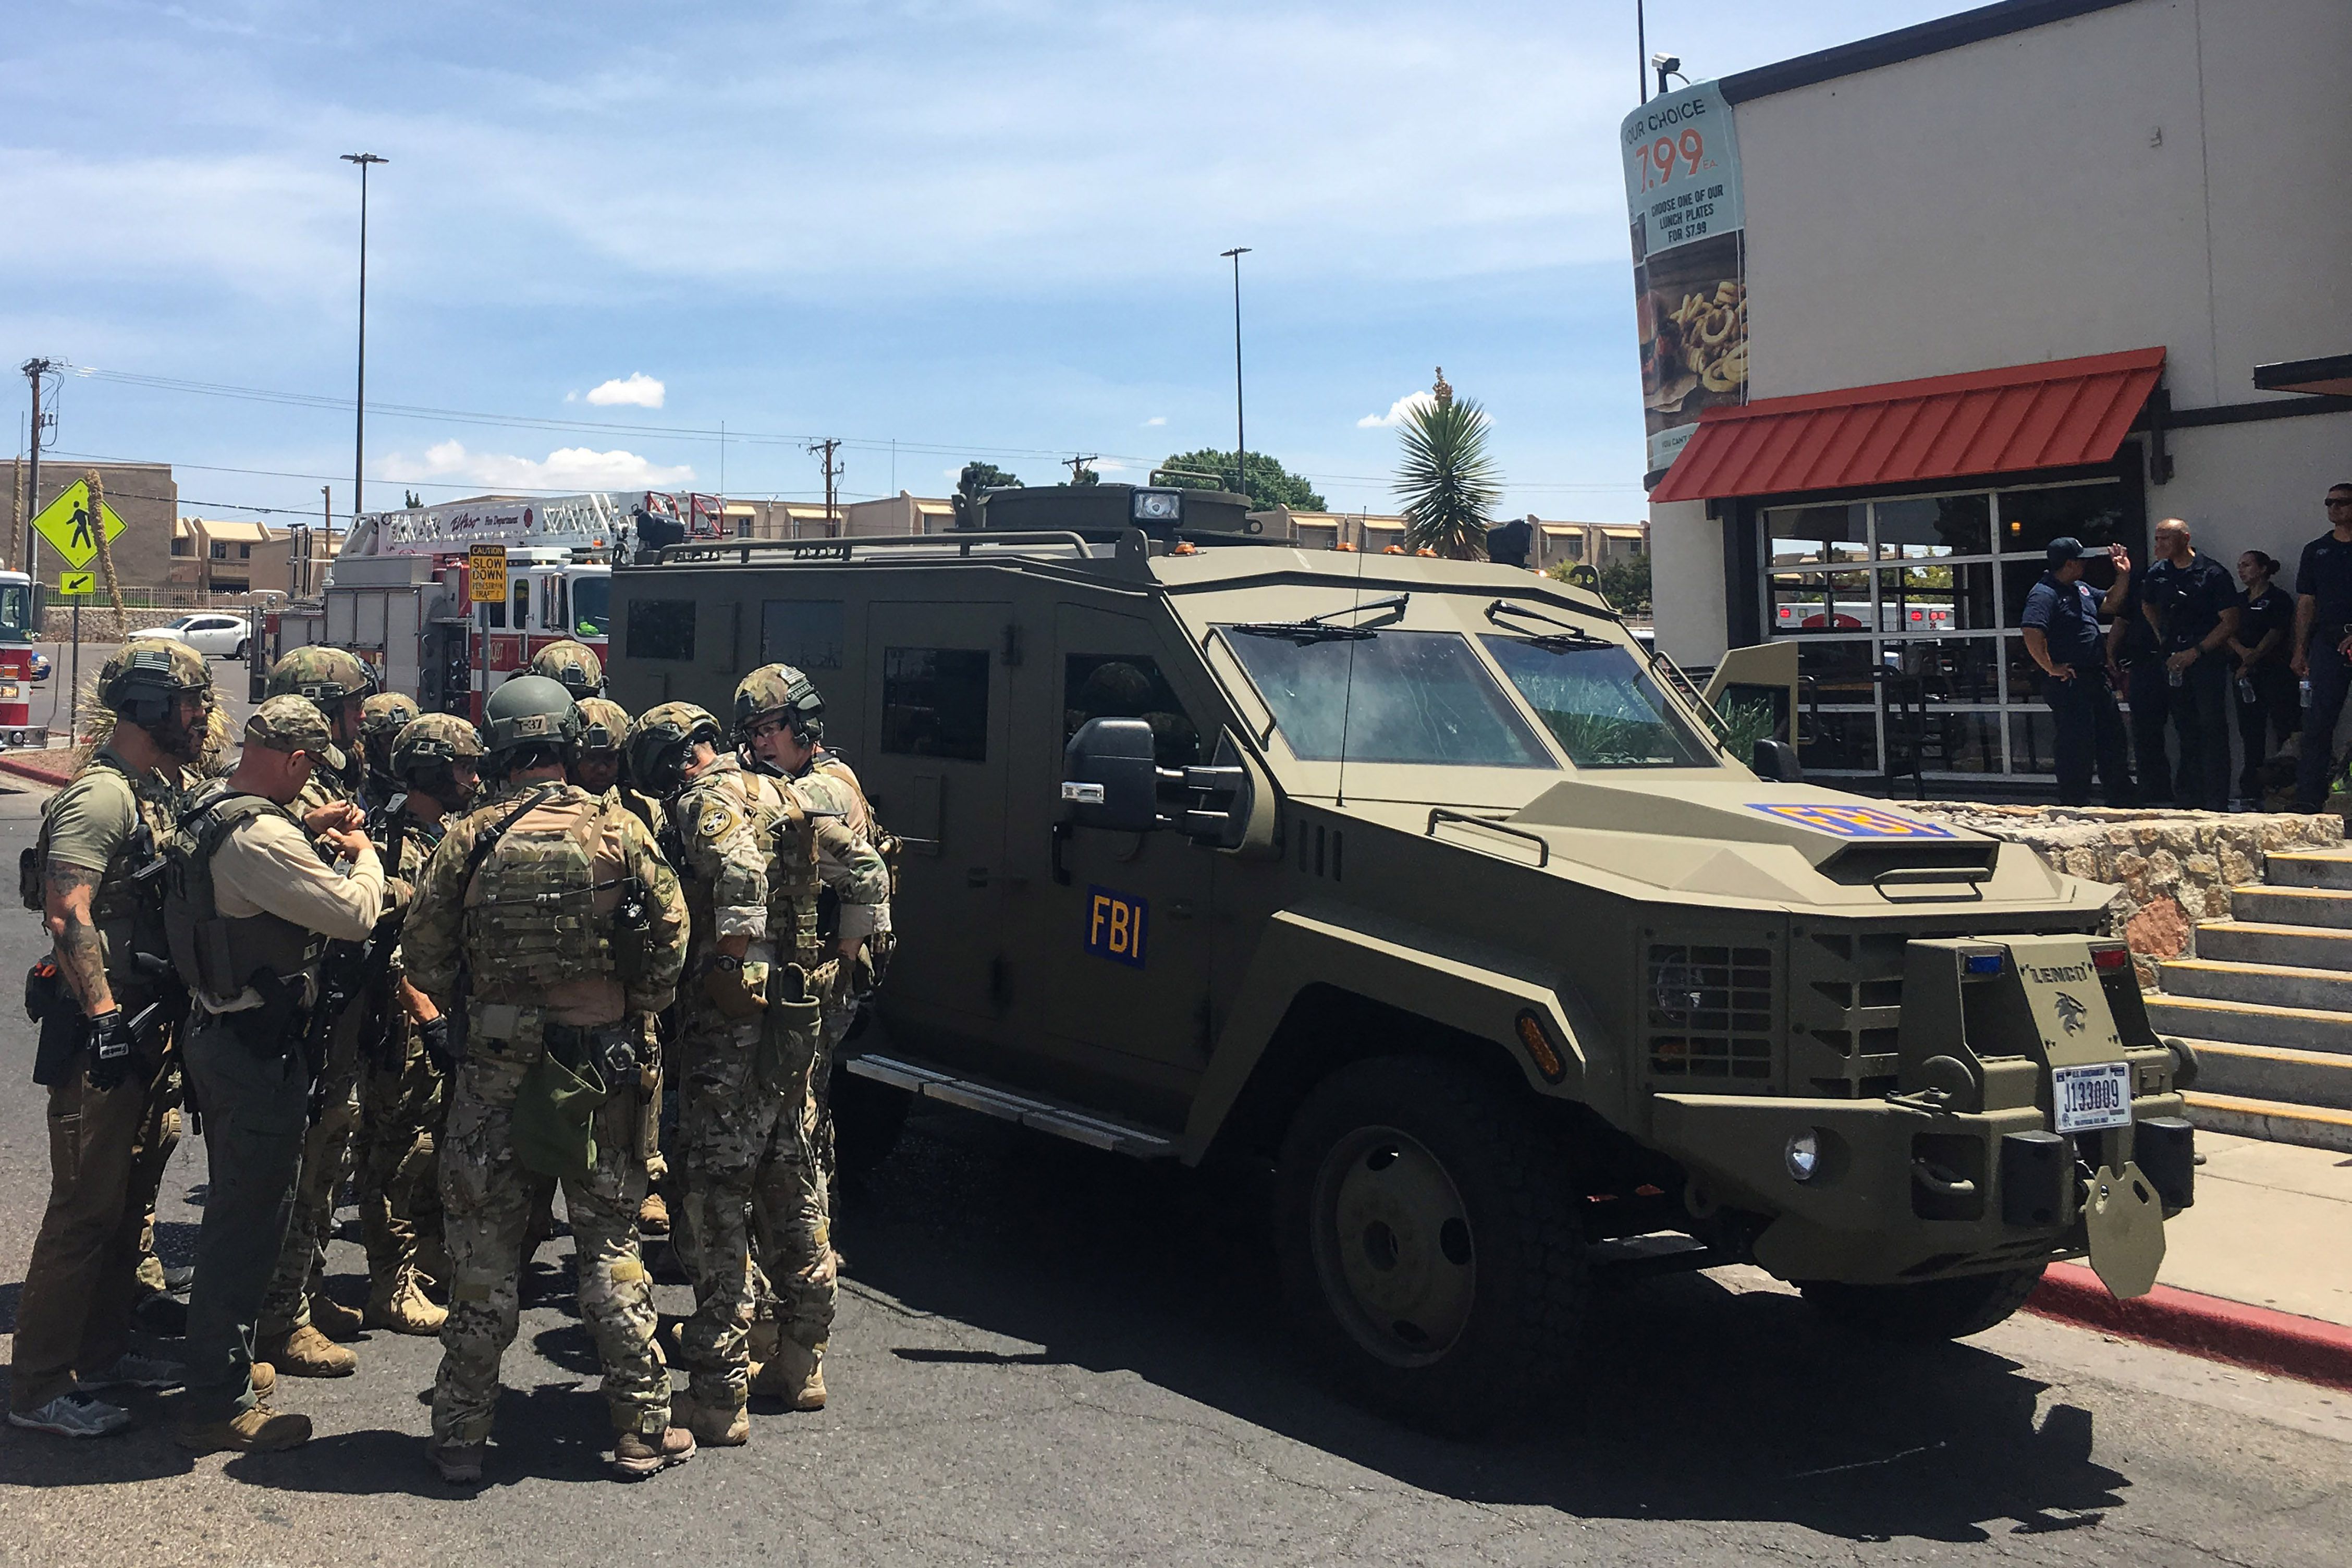 Swat team responds to mass shooting